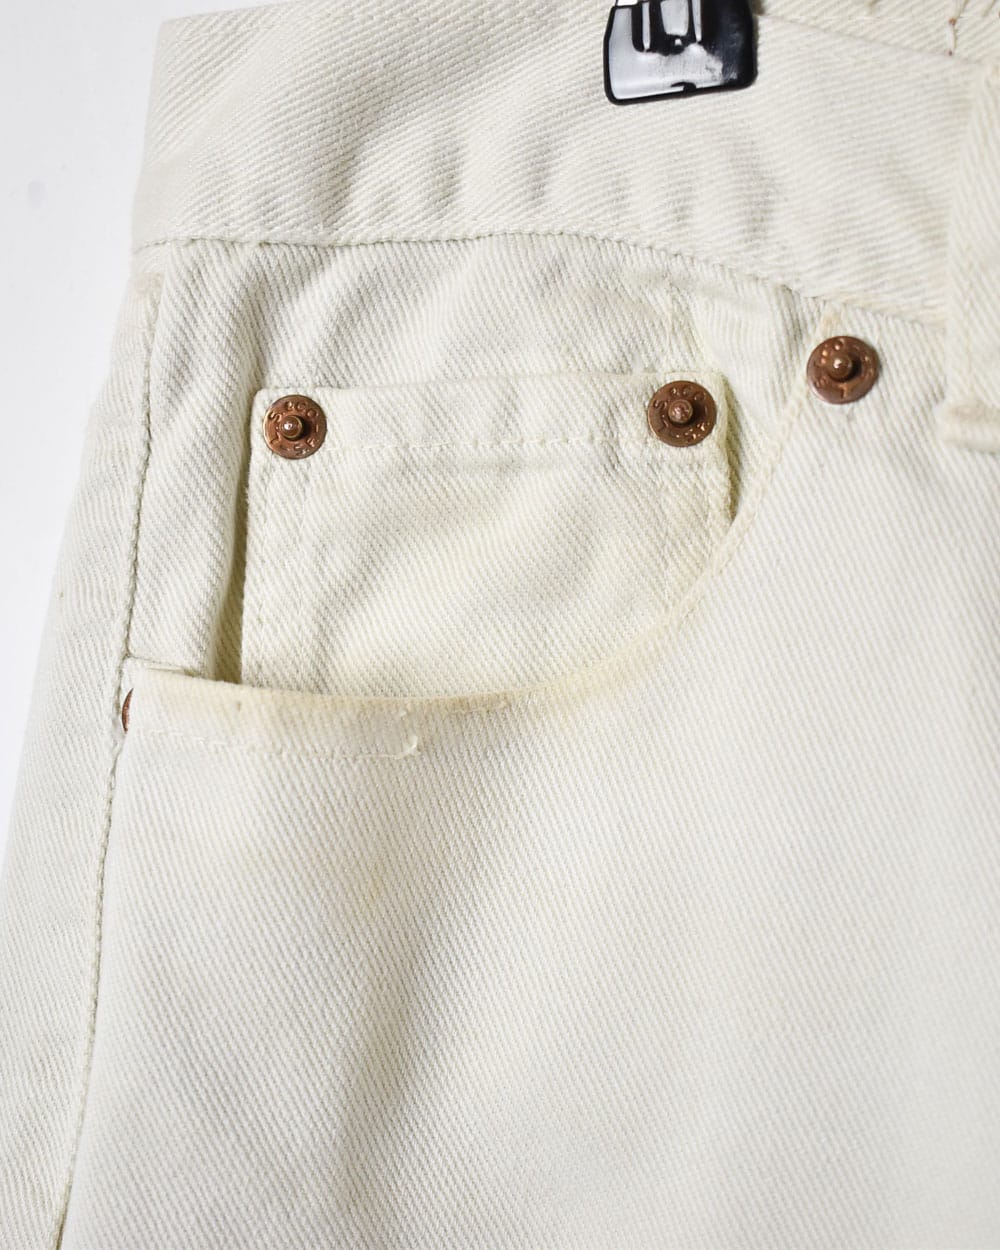 White Levi's 501 Jeans - W36 L29